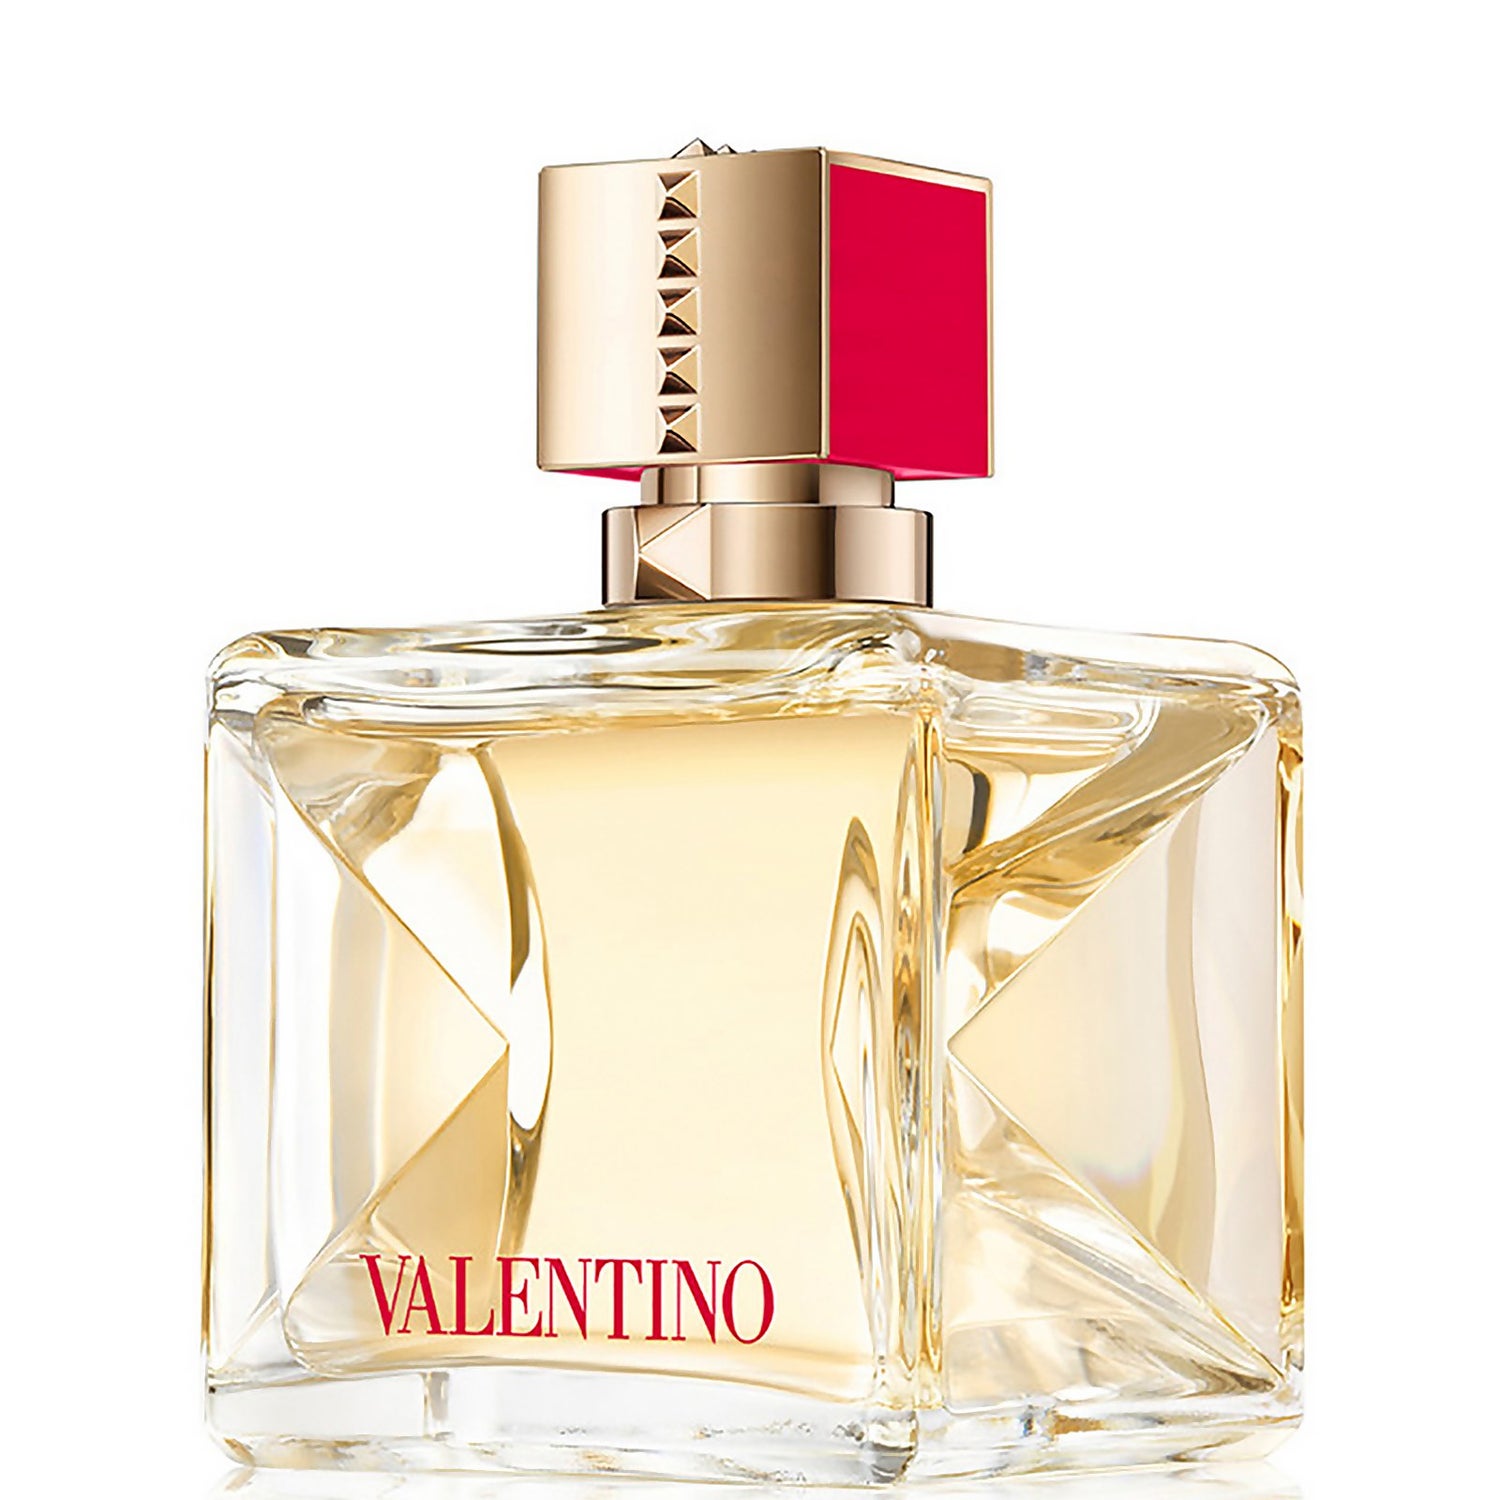 Valentino Voce Viva Eau de Parfum til kvinder - 100 ml